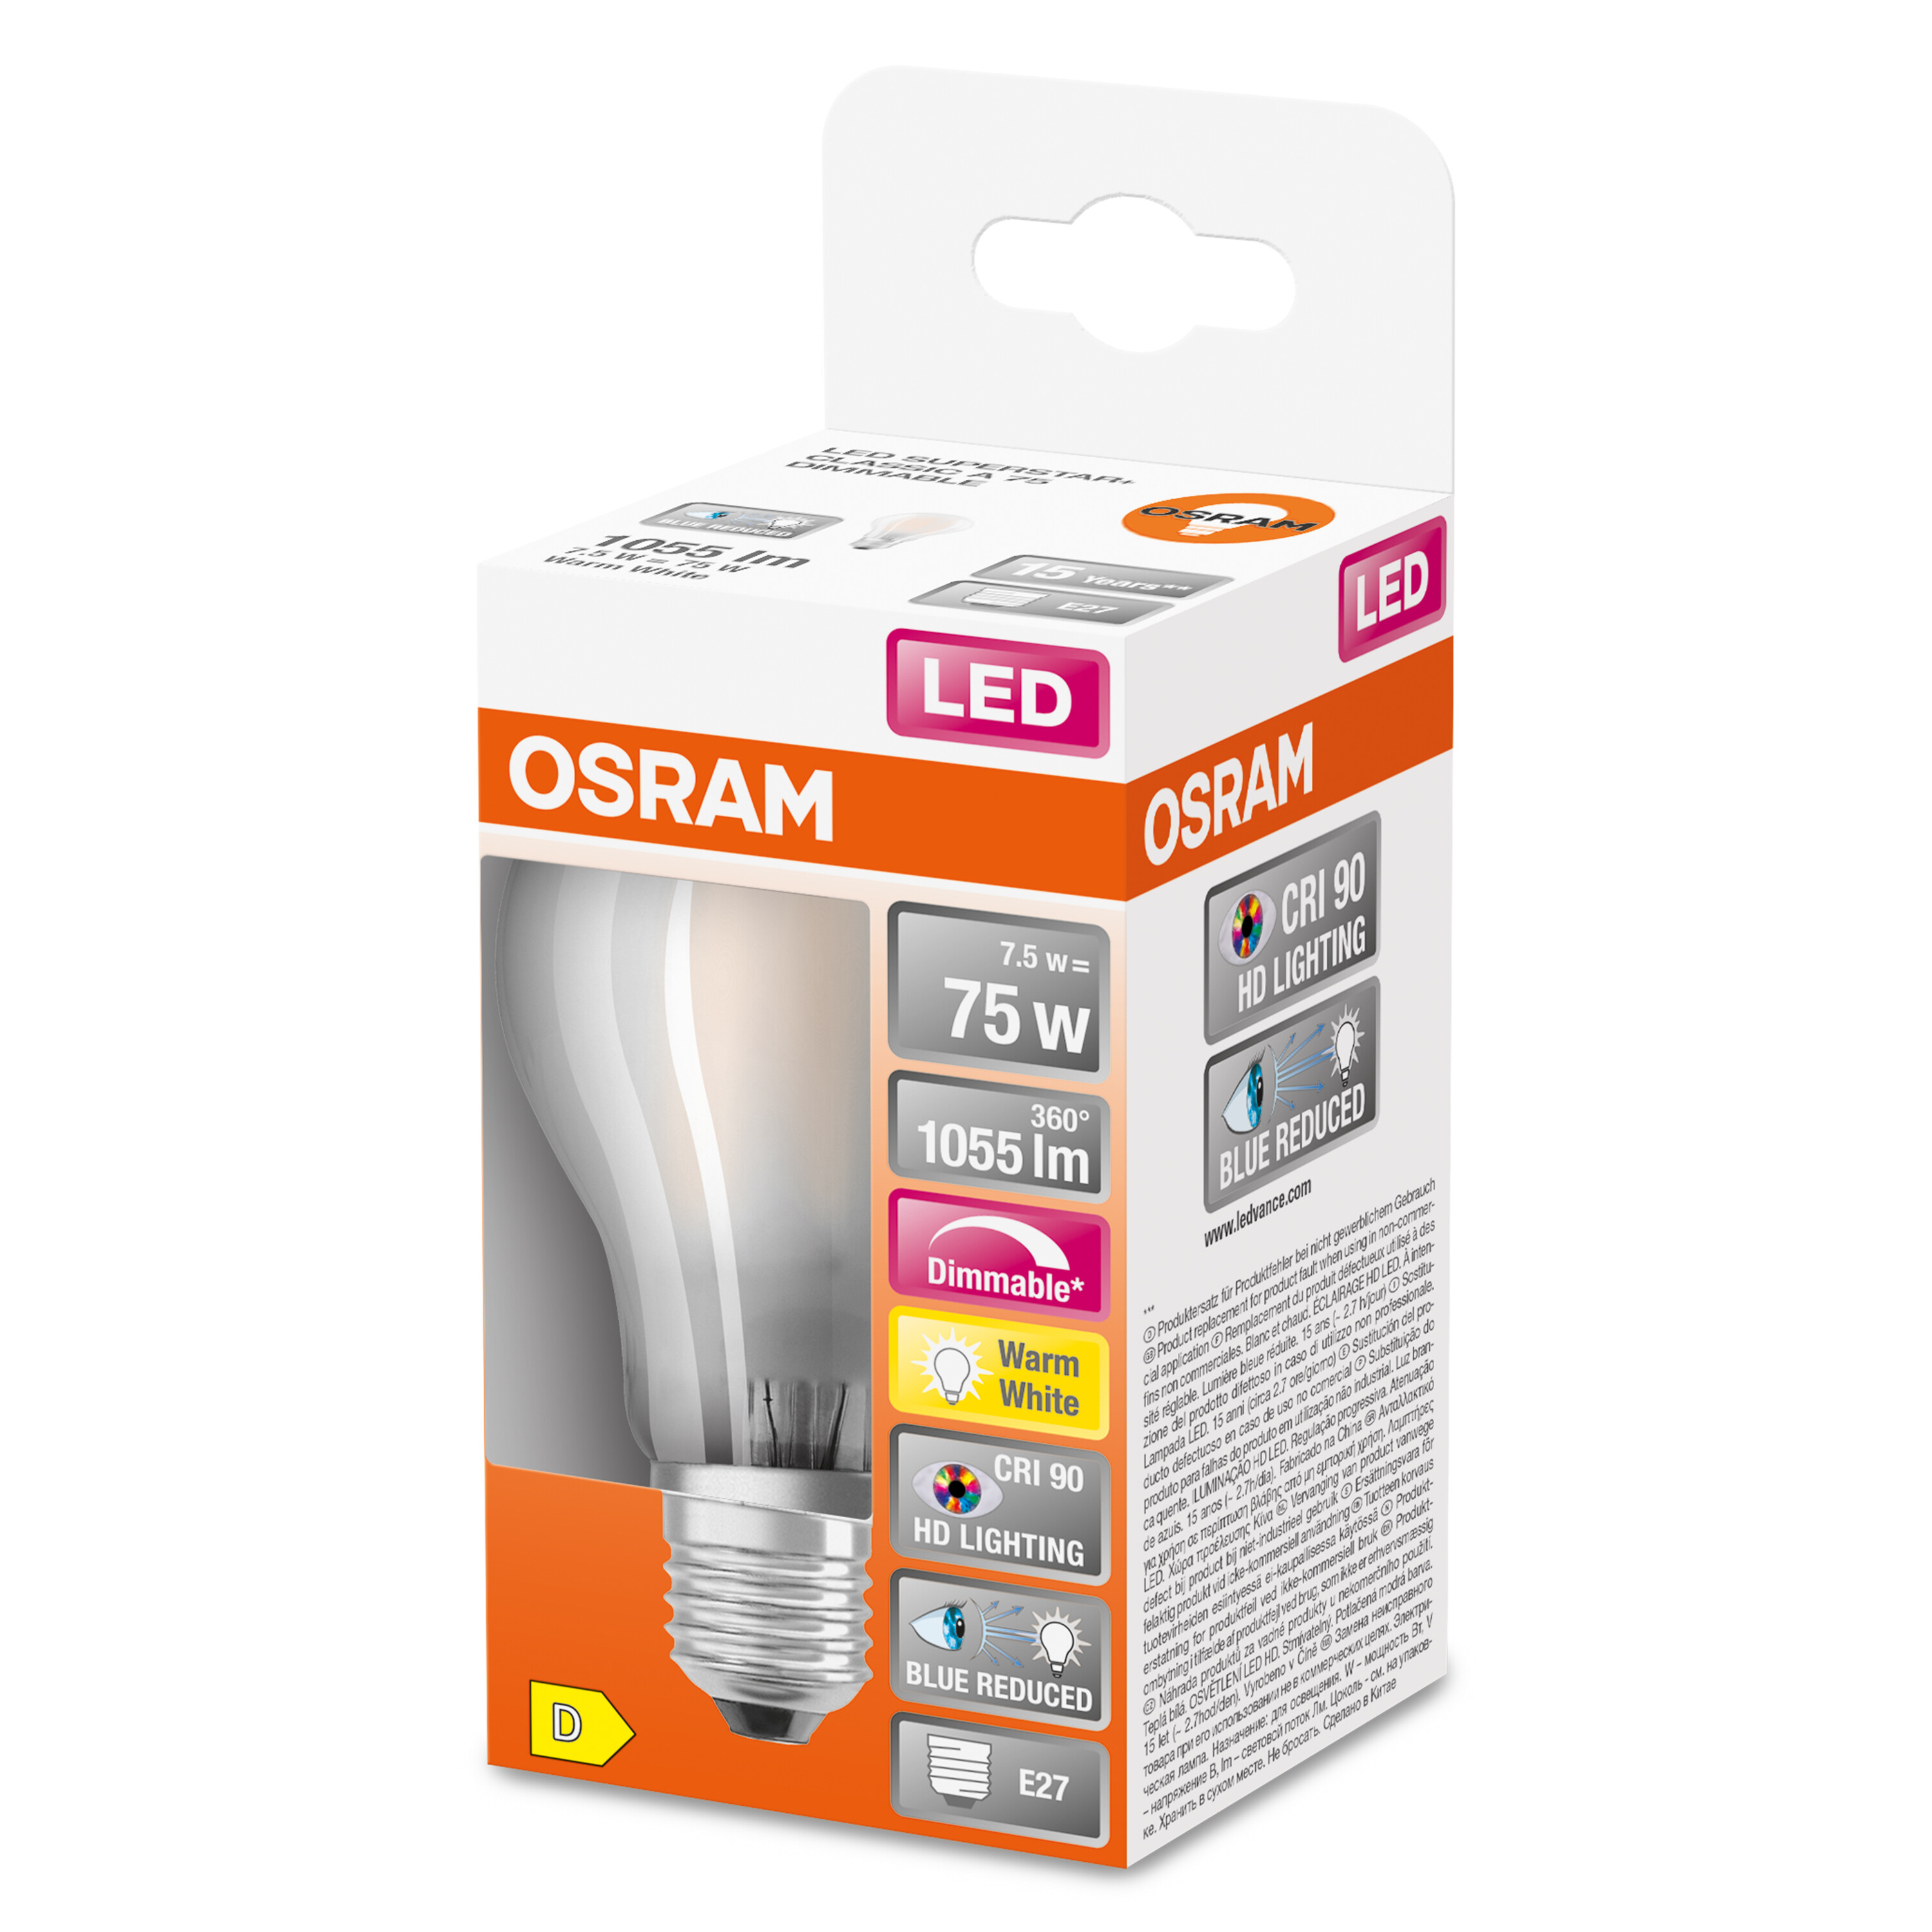 OSRAM  LED SUPERISTAR PLUS CLASSIC 1055 LED Warmweiß Lampe FILAMENT A Lumen